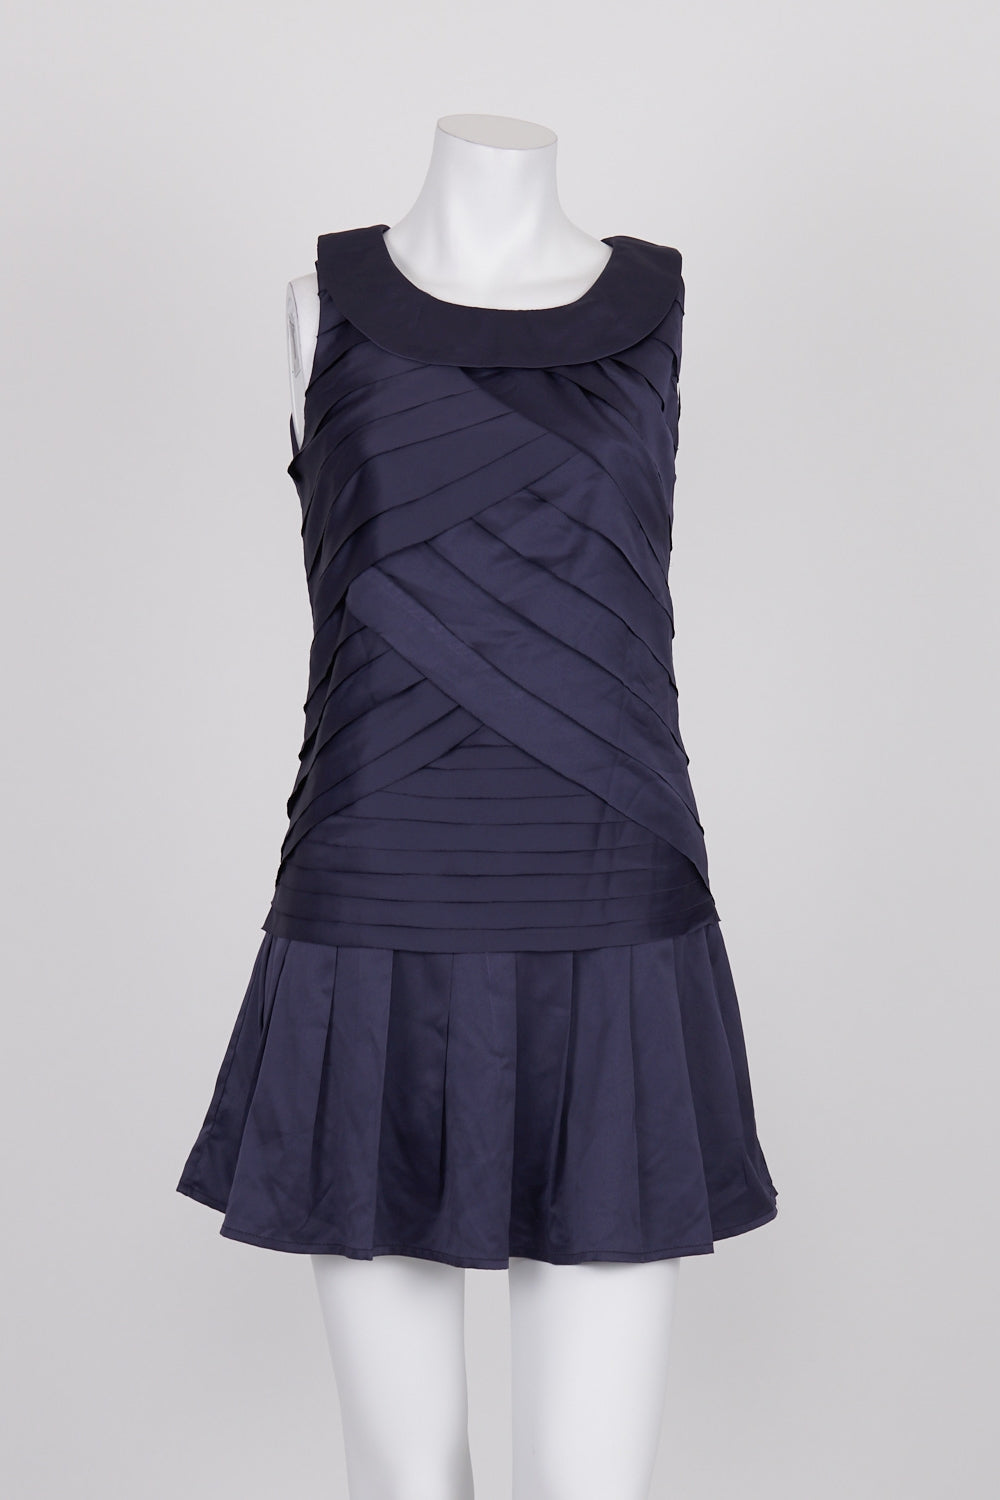 Esley Purple Layered Dress S